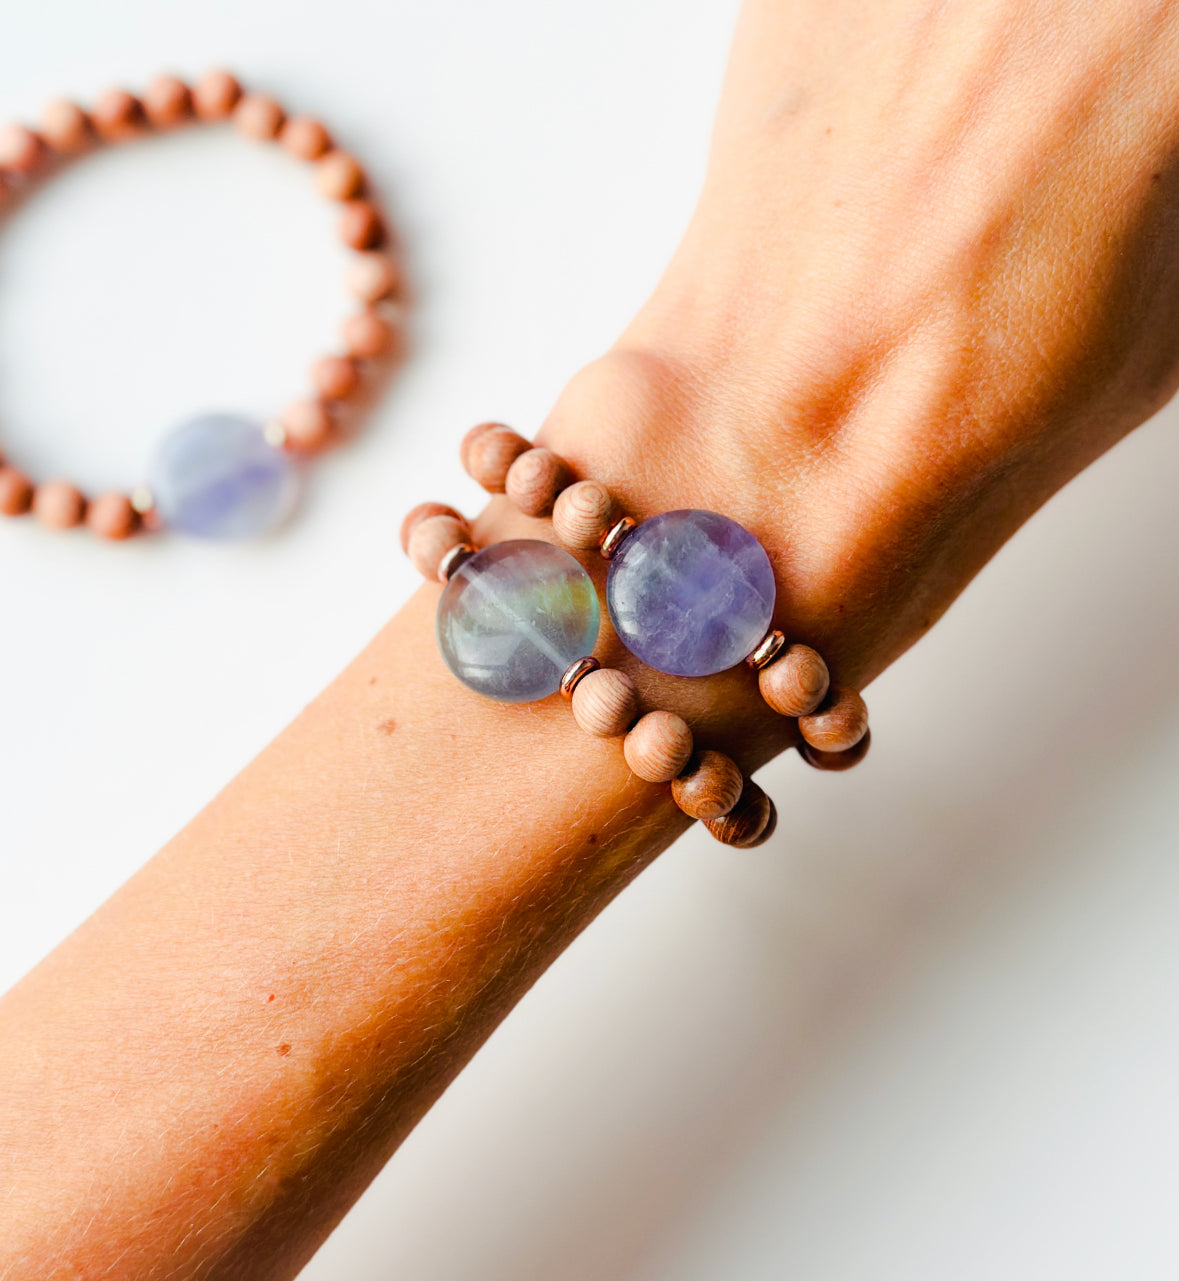 Gemsotne bracelet with a fluroite focal bead 30% off sale shop now